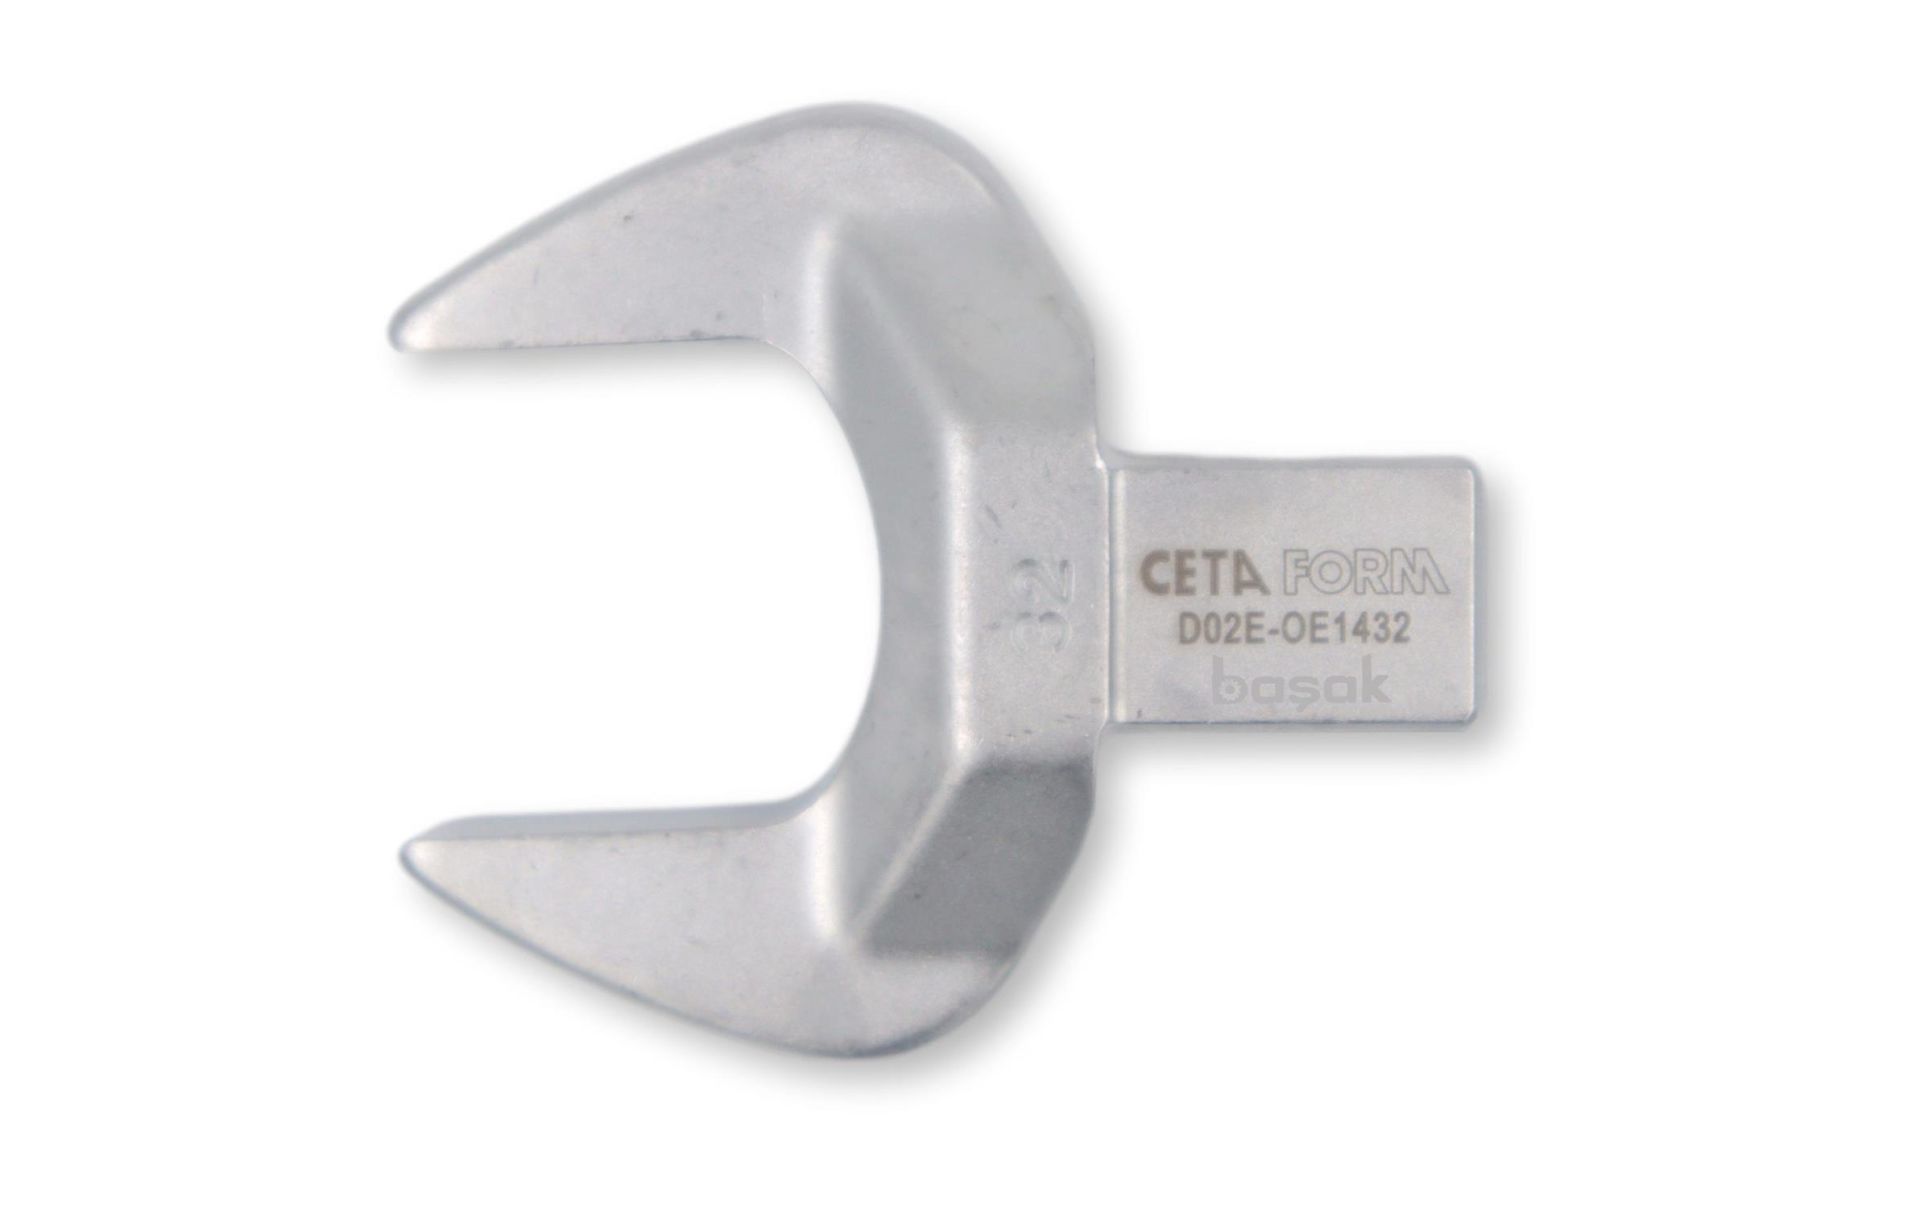 Ceta Form 32mm Açık Ağız Tork Anahtar Ucu (14x18mm) D02E-OE1432